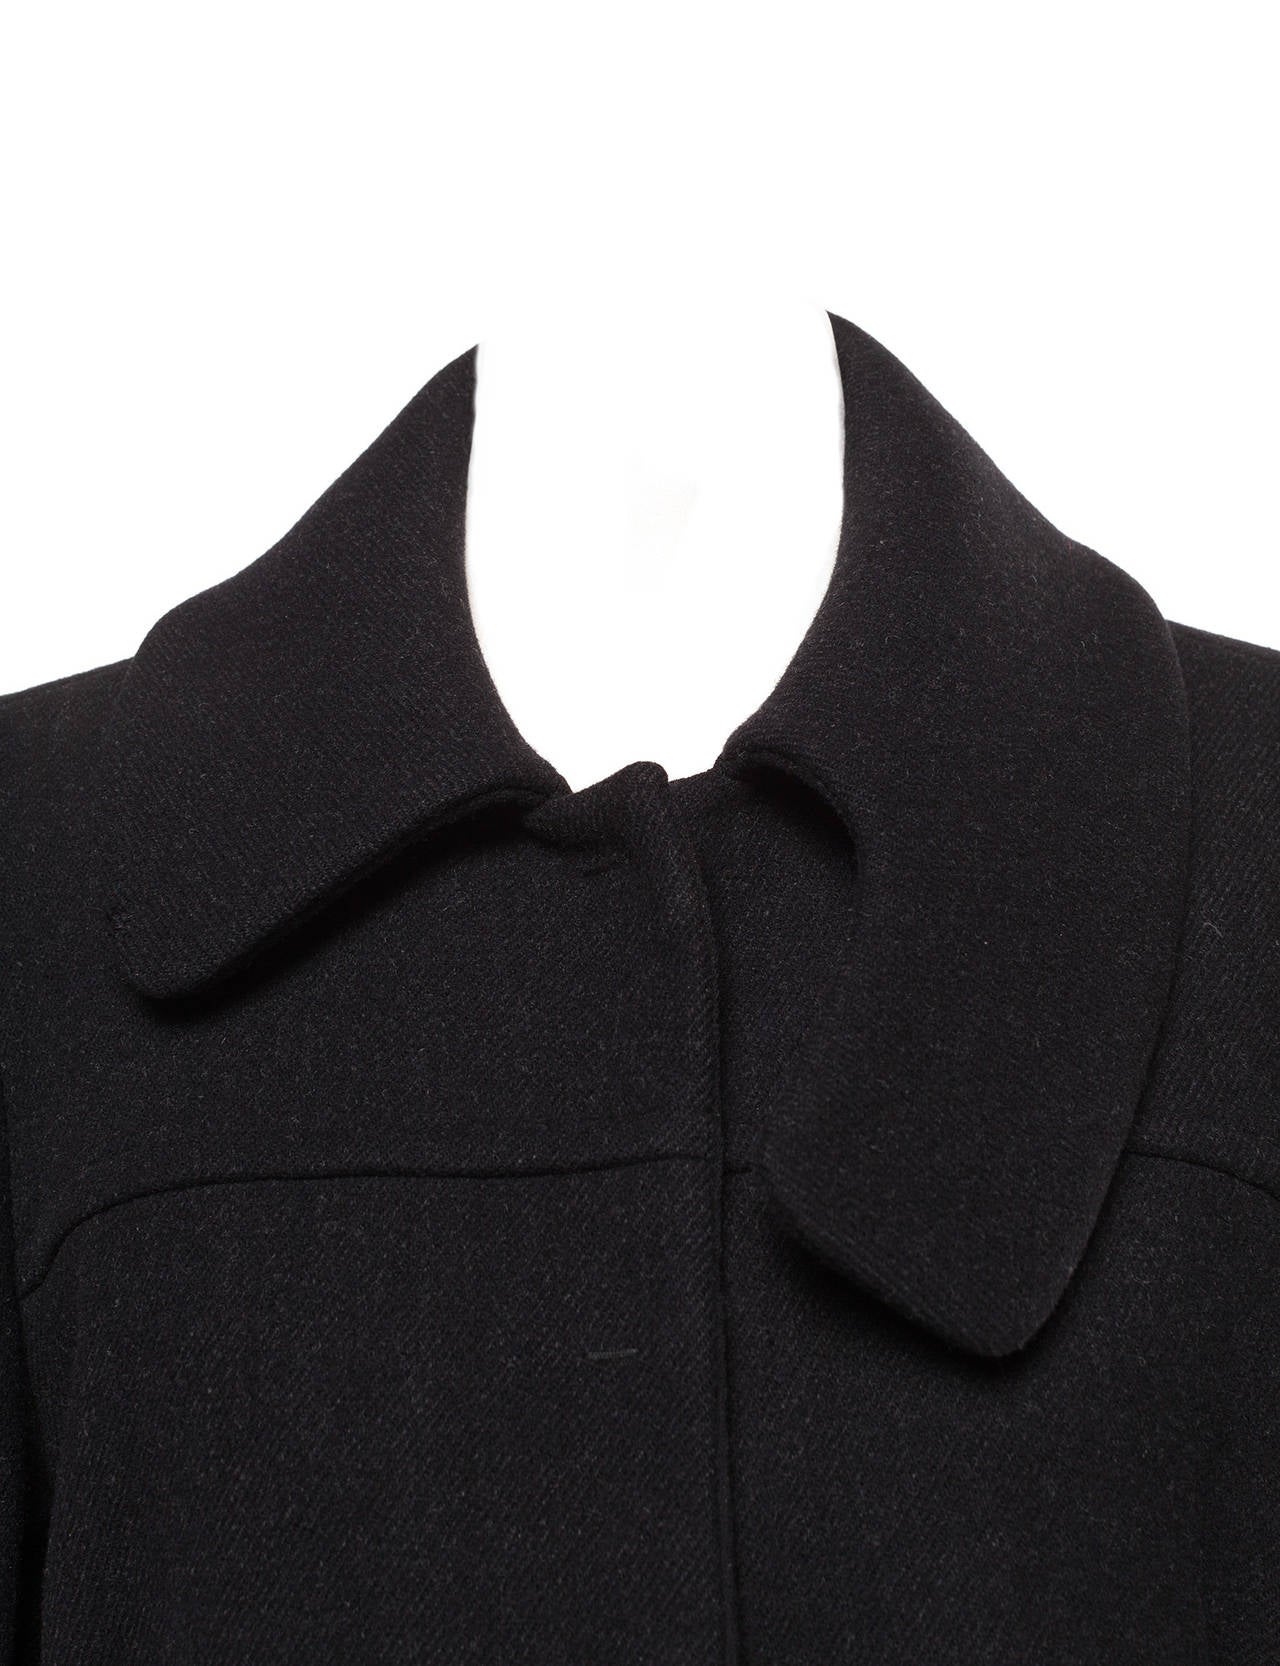 Prada minimal Wool coat with collar detail and large pockets, Sz. M 2